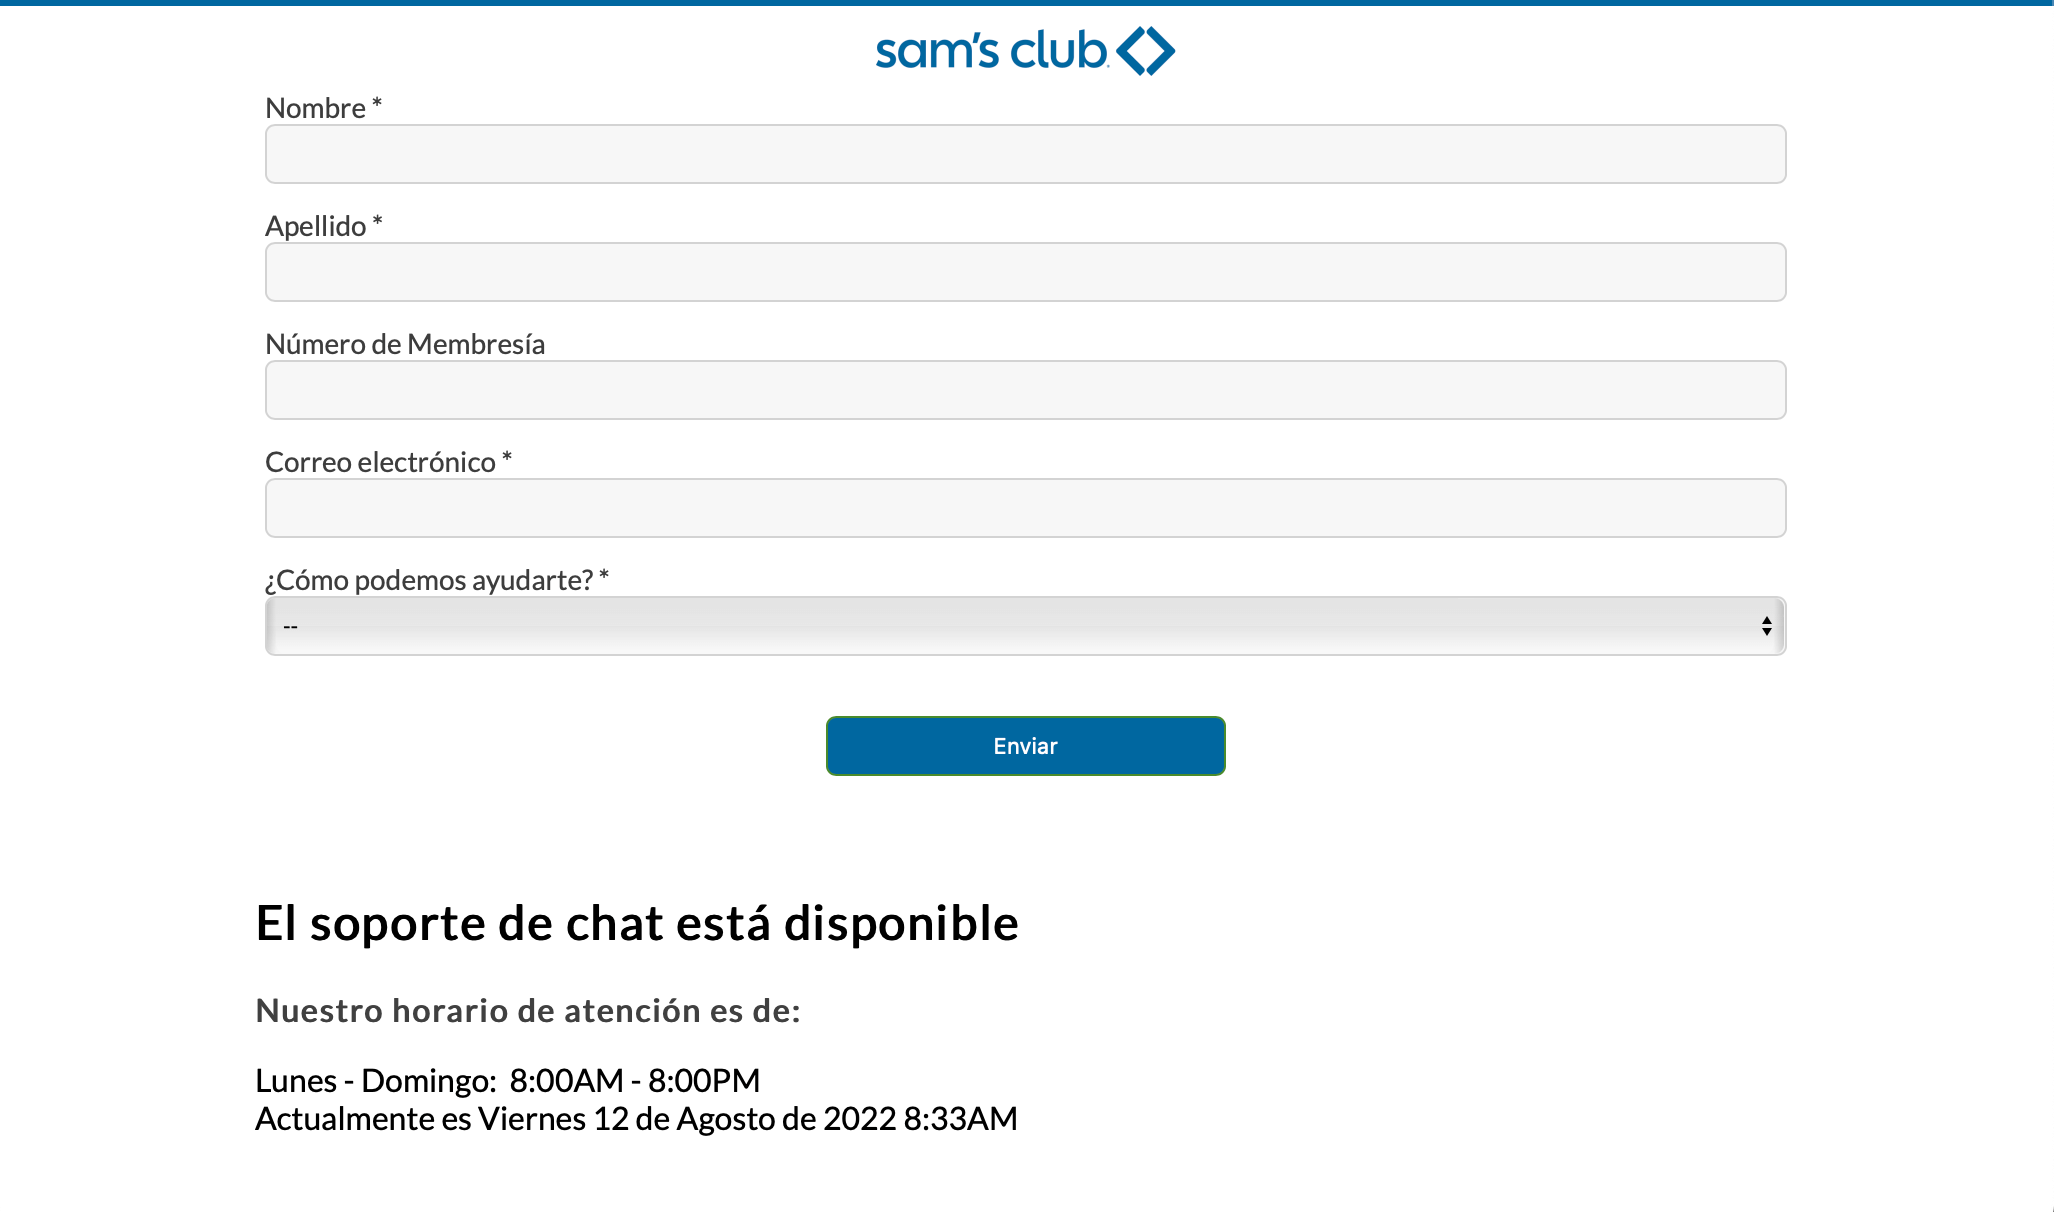 Ejemplo de página de contacto: Sam's Club